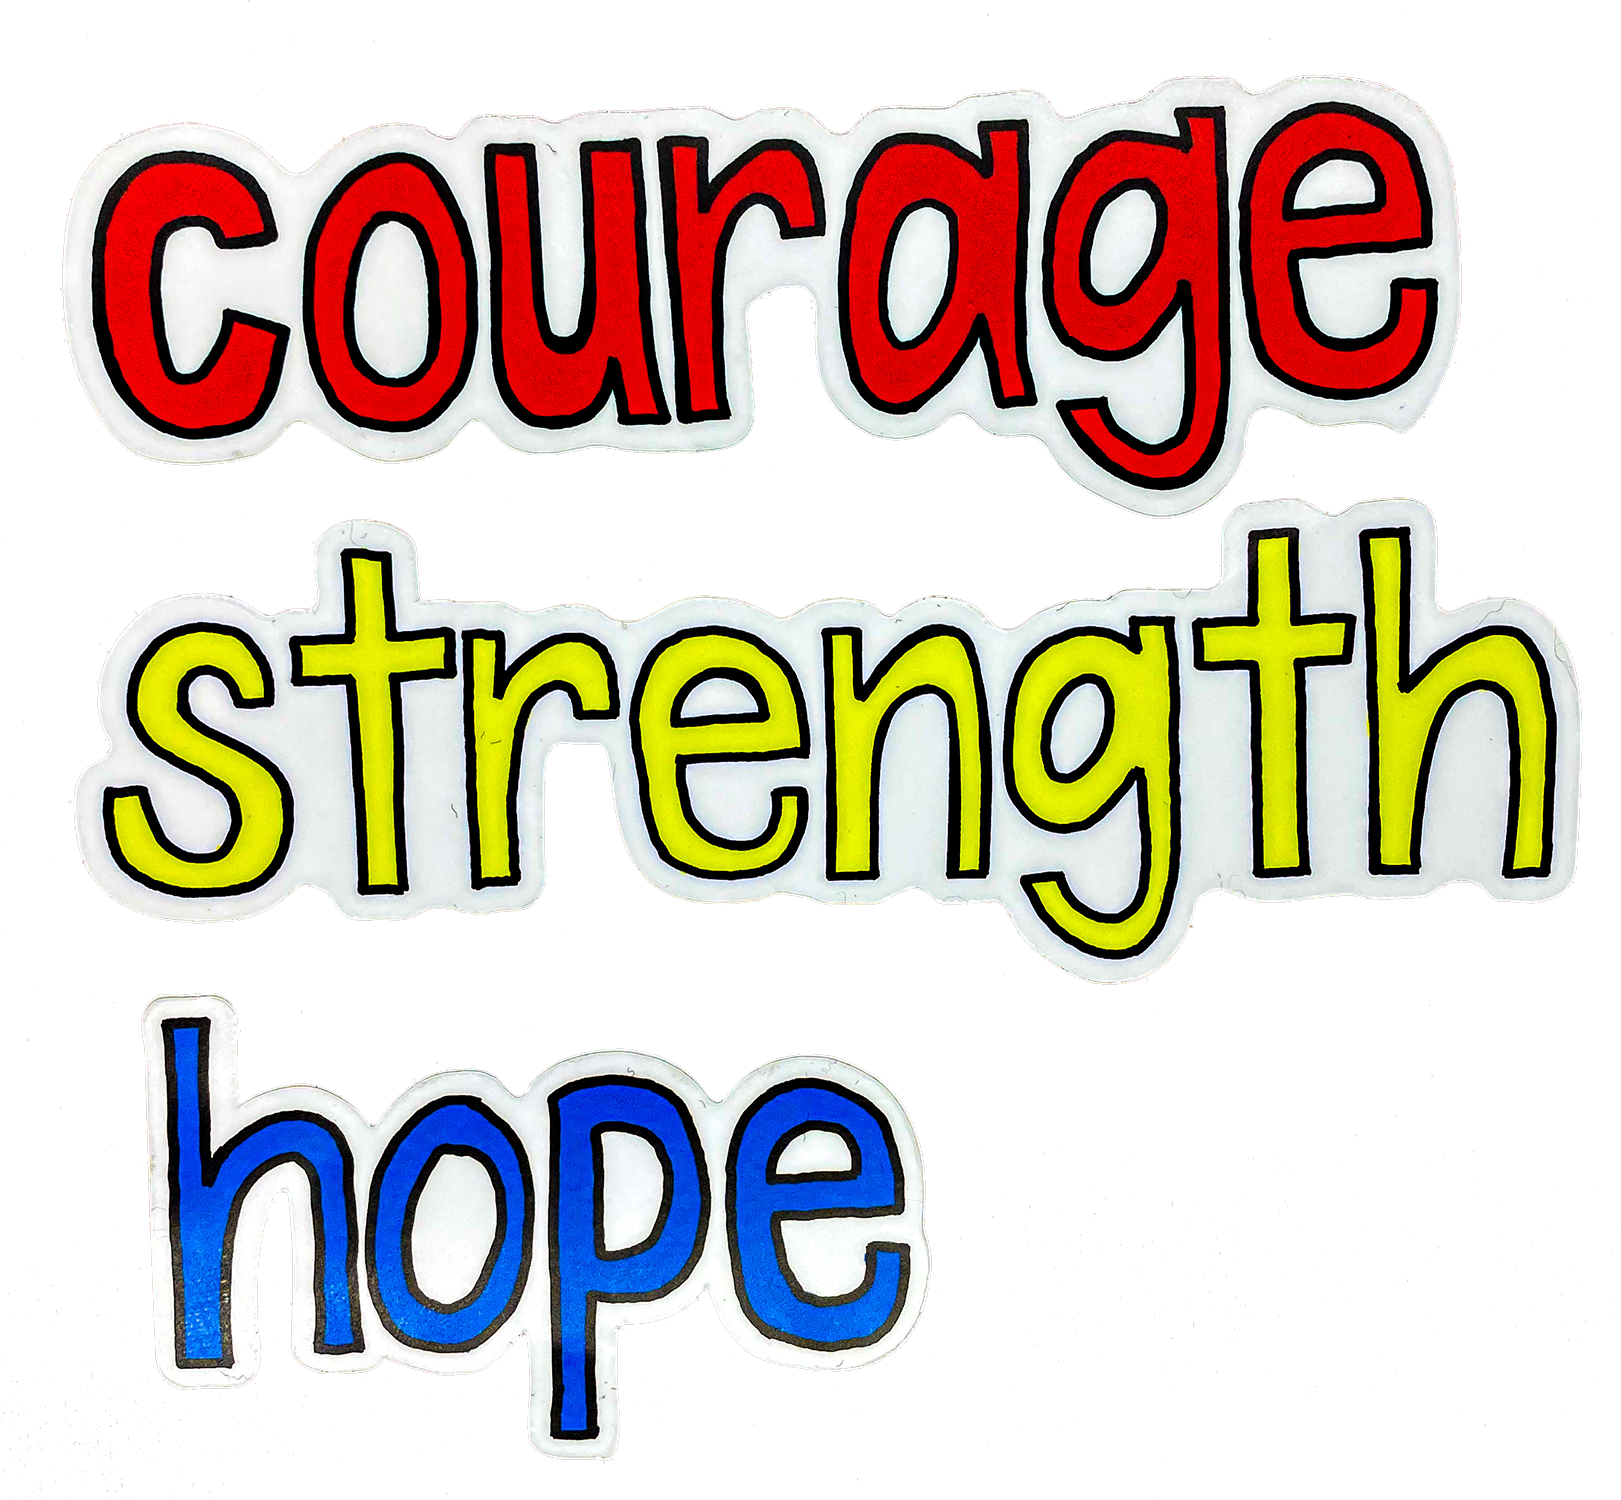 Courage, Strength, Hope Stickers - TinySuperheroes